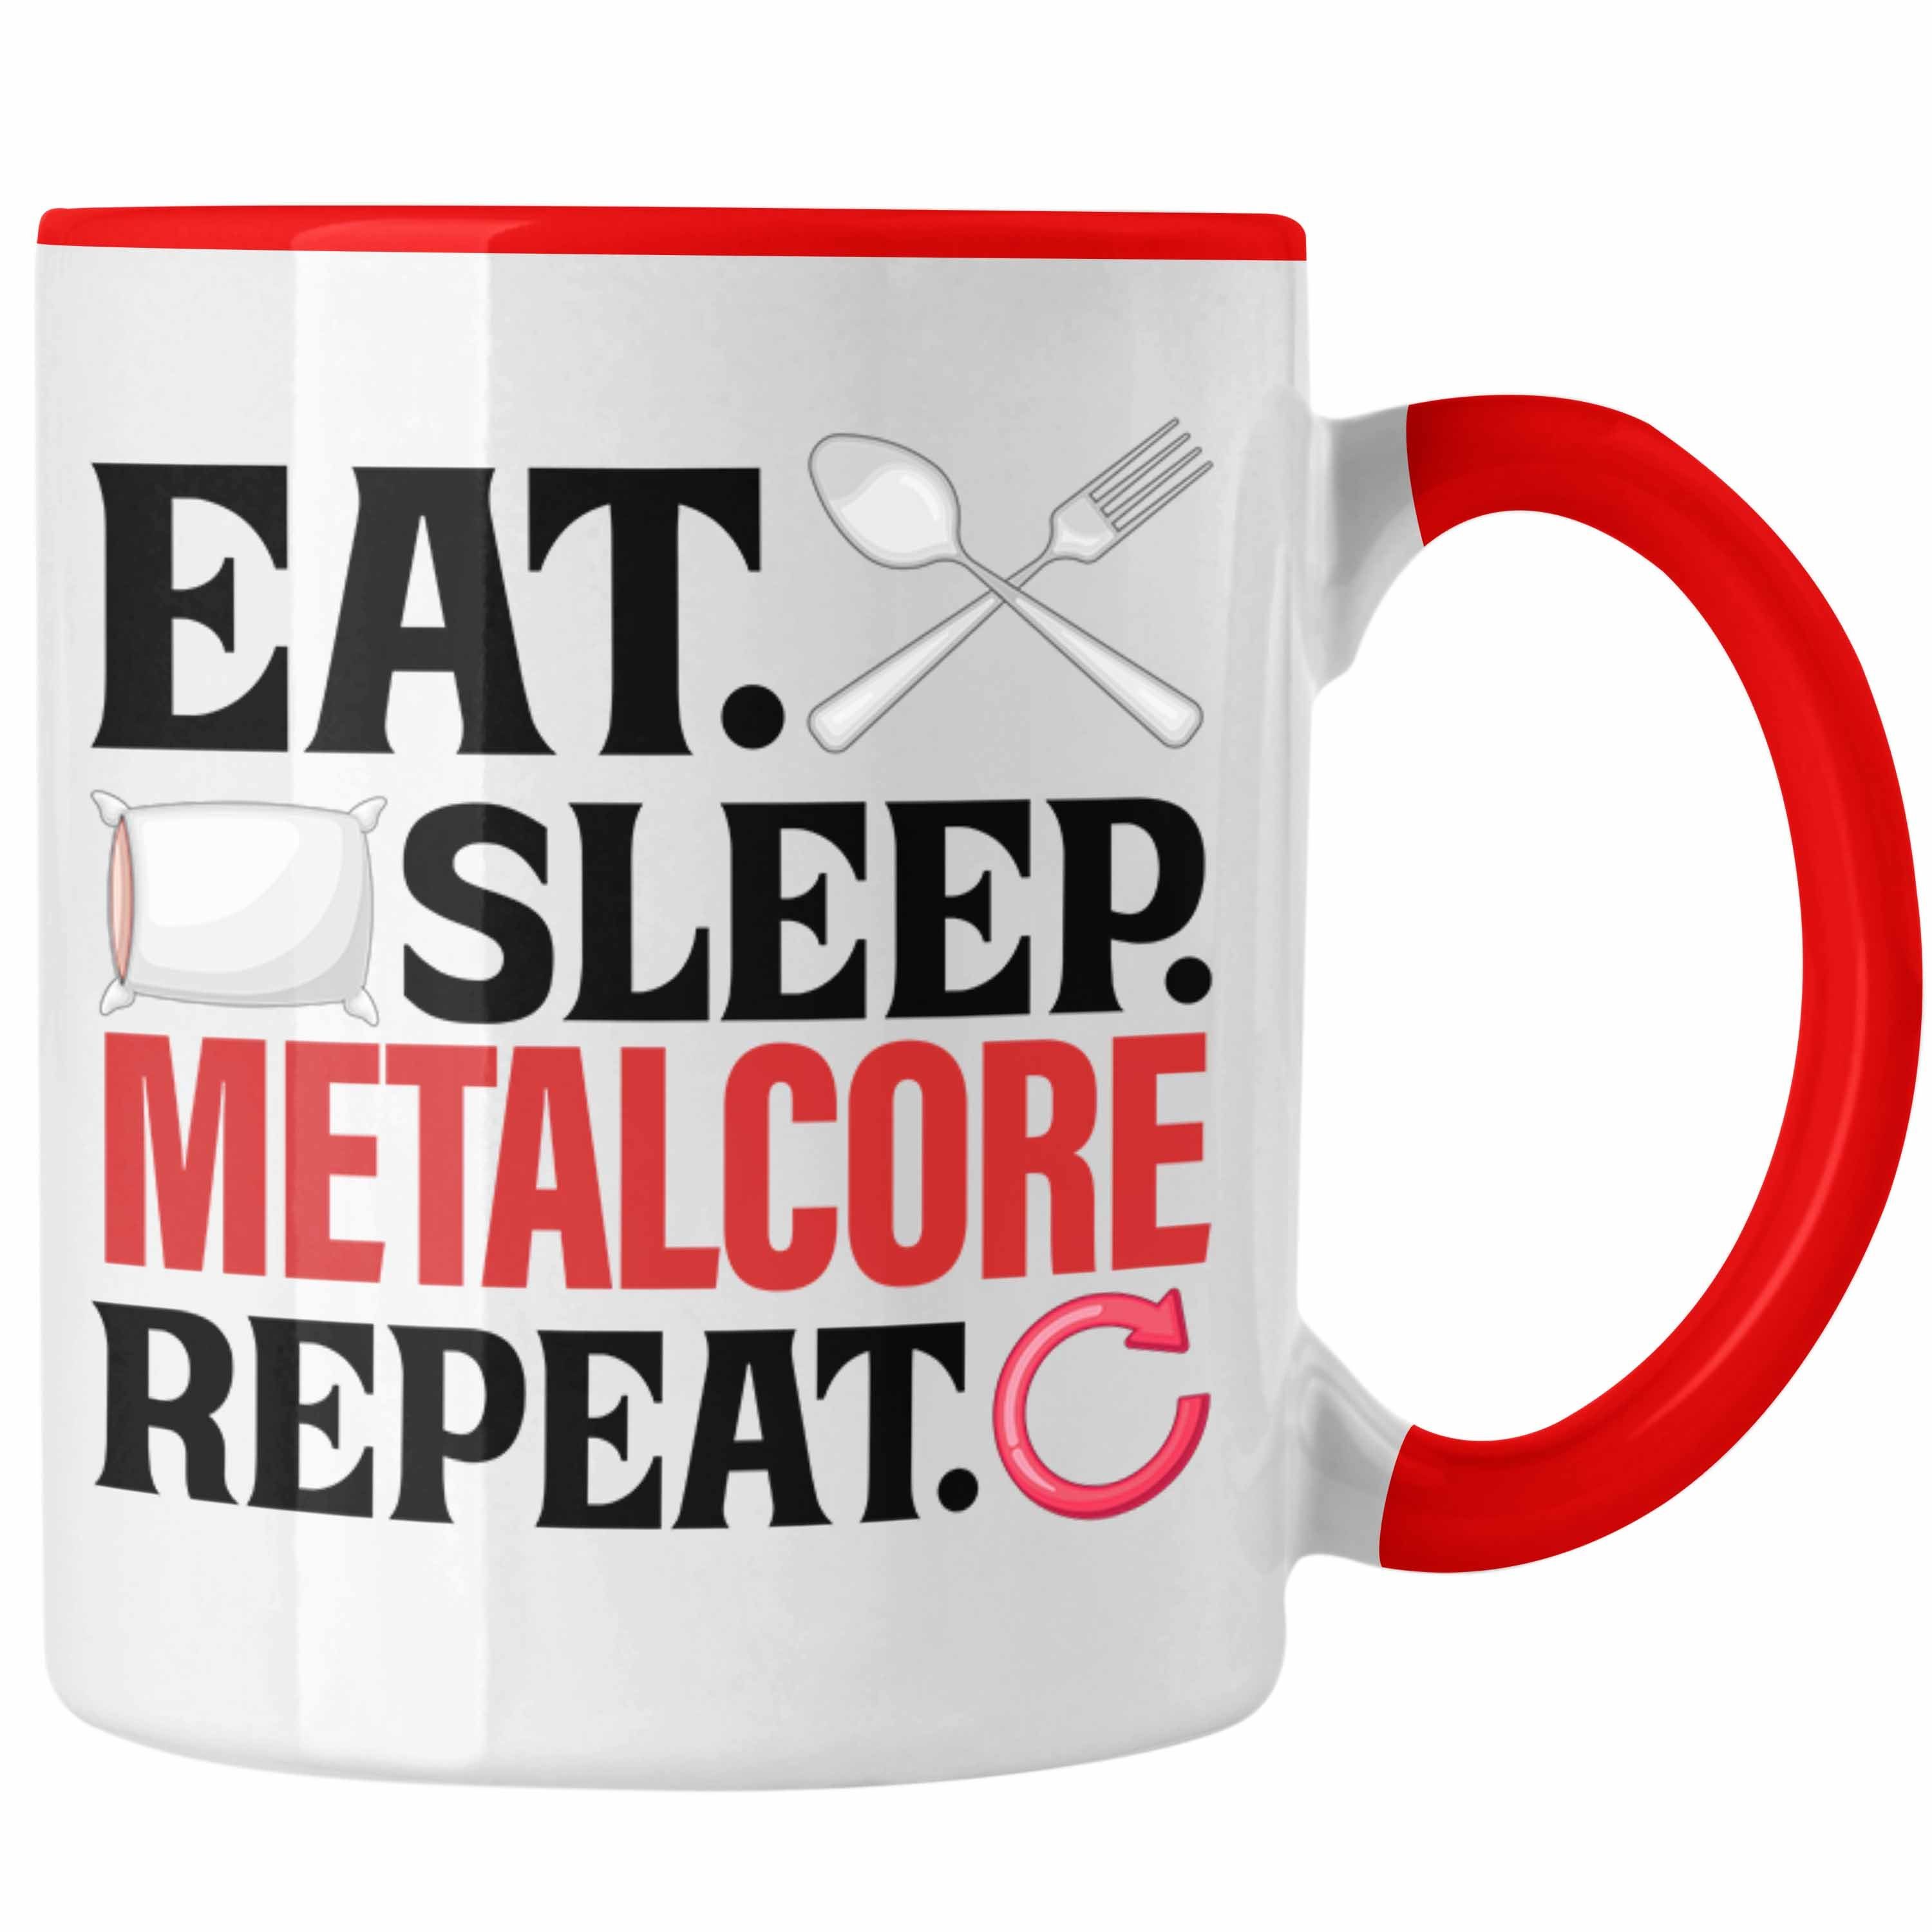 Metalcore Rot Musik Geschenk Trendation Metal Heavy Eat Sleep Tasse Tasse Repeat